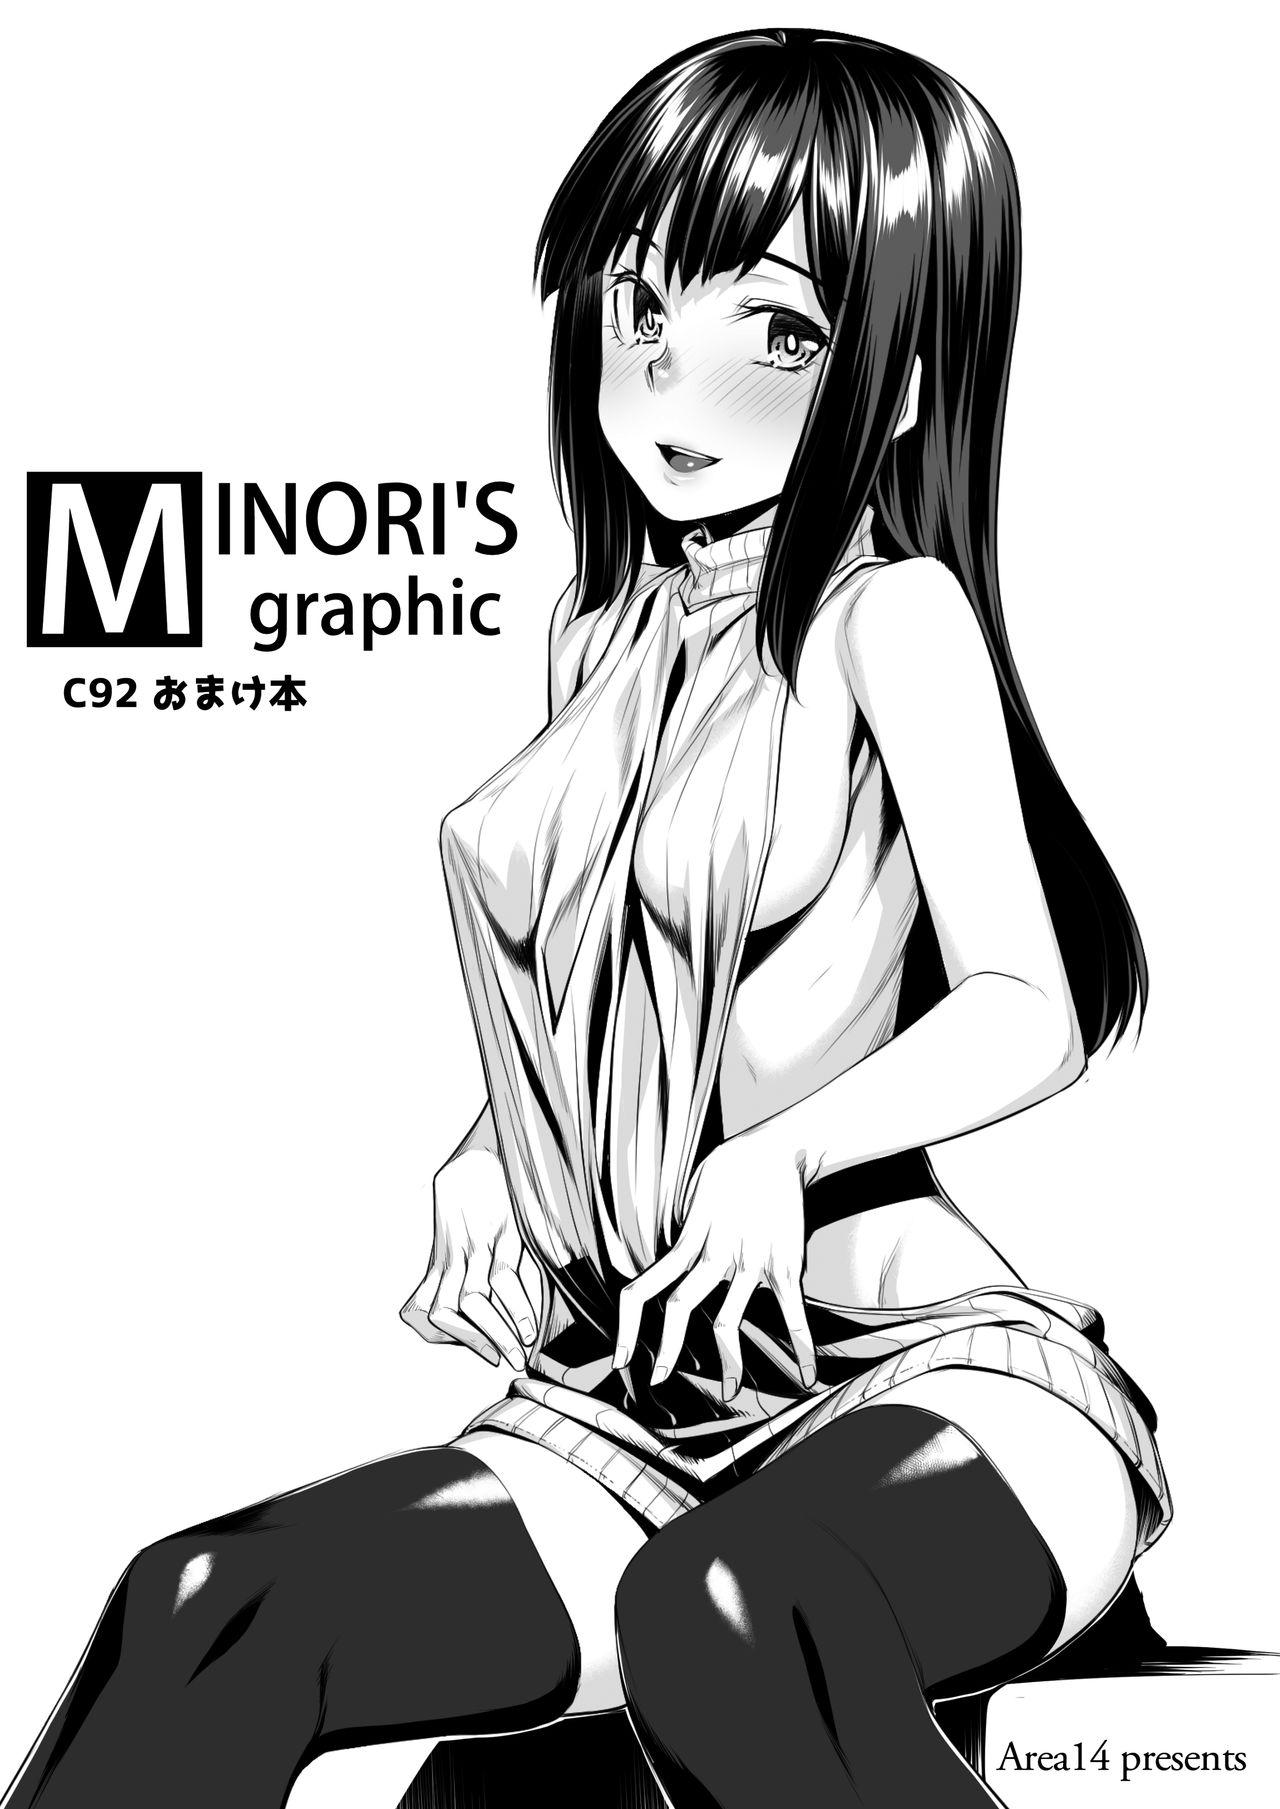 MINORI'S graphic C92 Omakebon 0